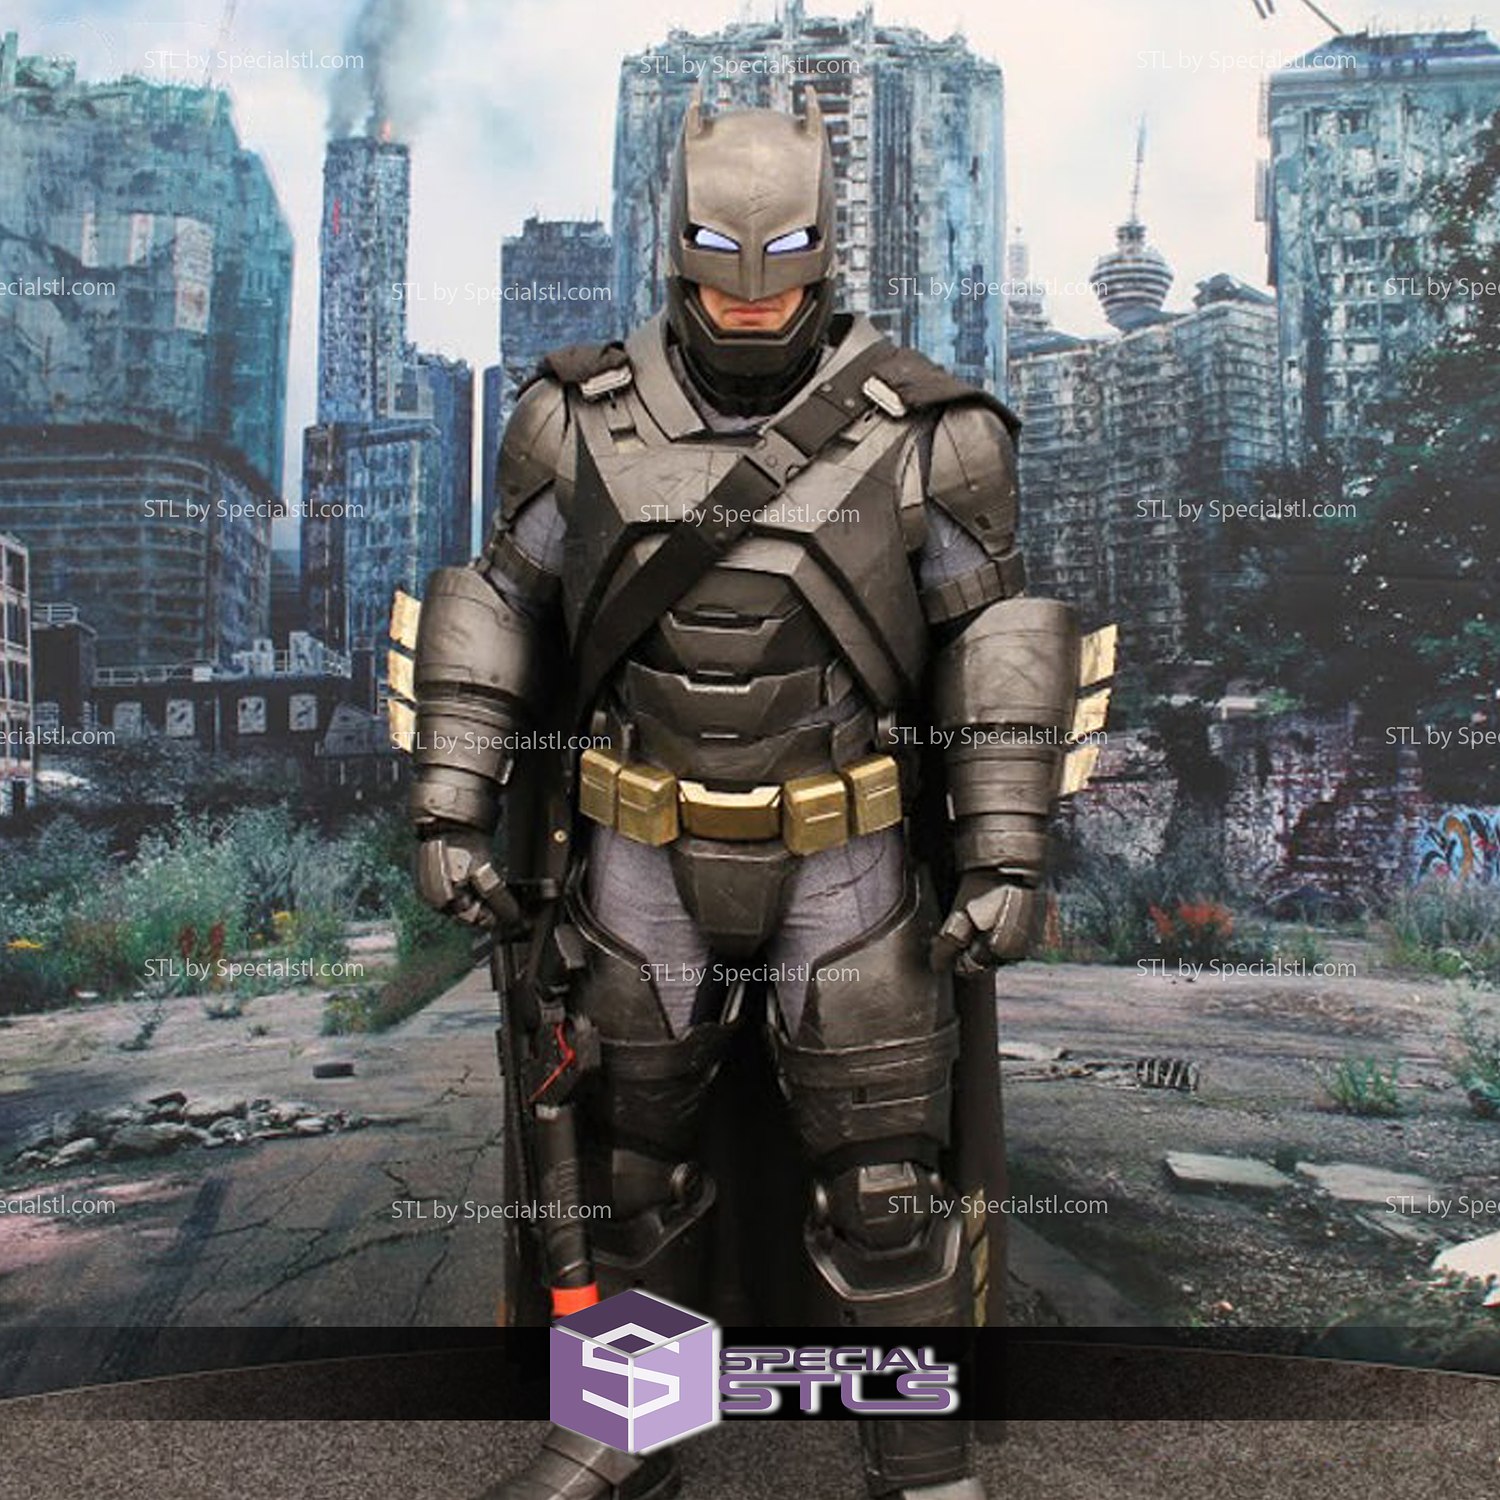 Cosplay Bat Suit from Batman vs Superman | SpecialSTL